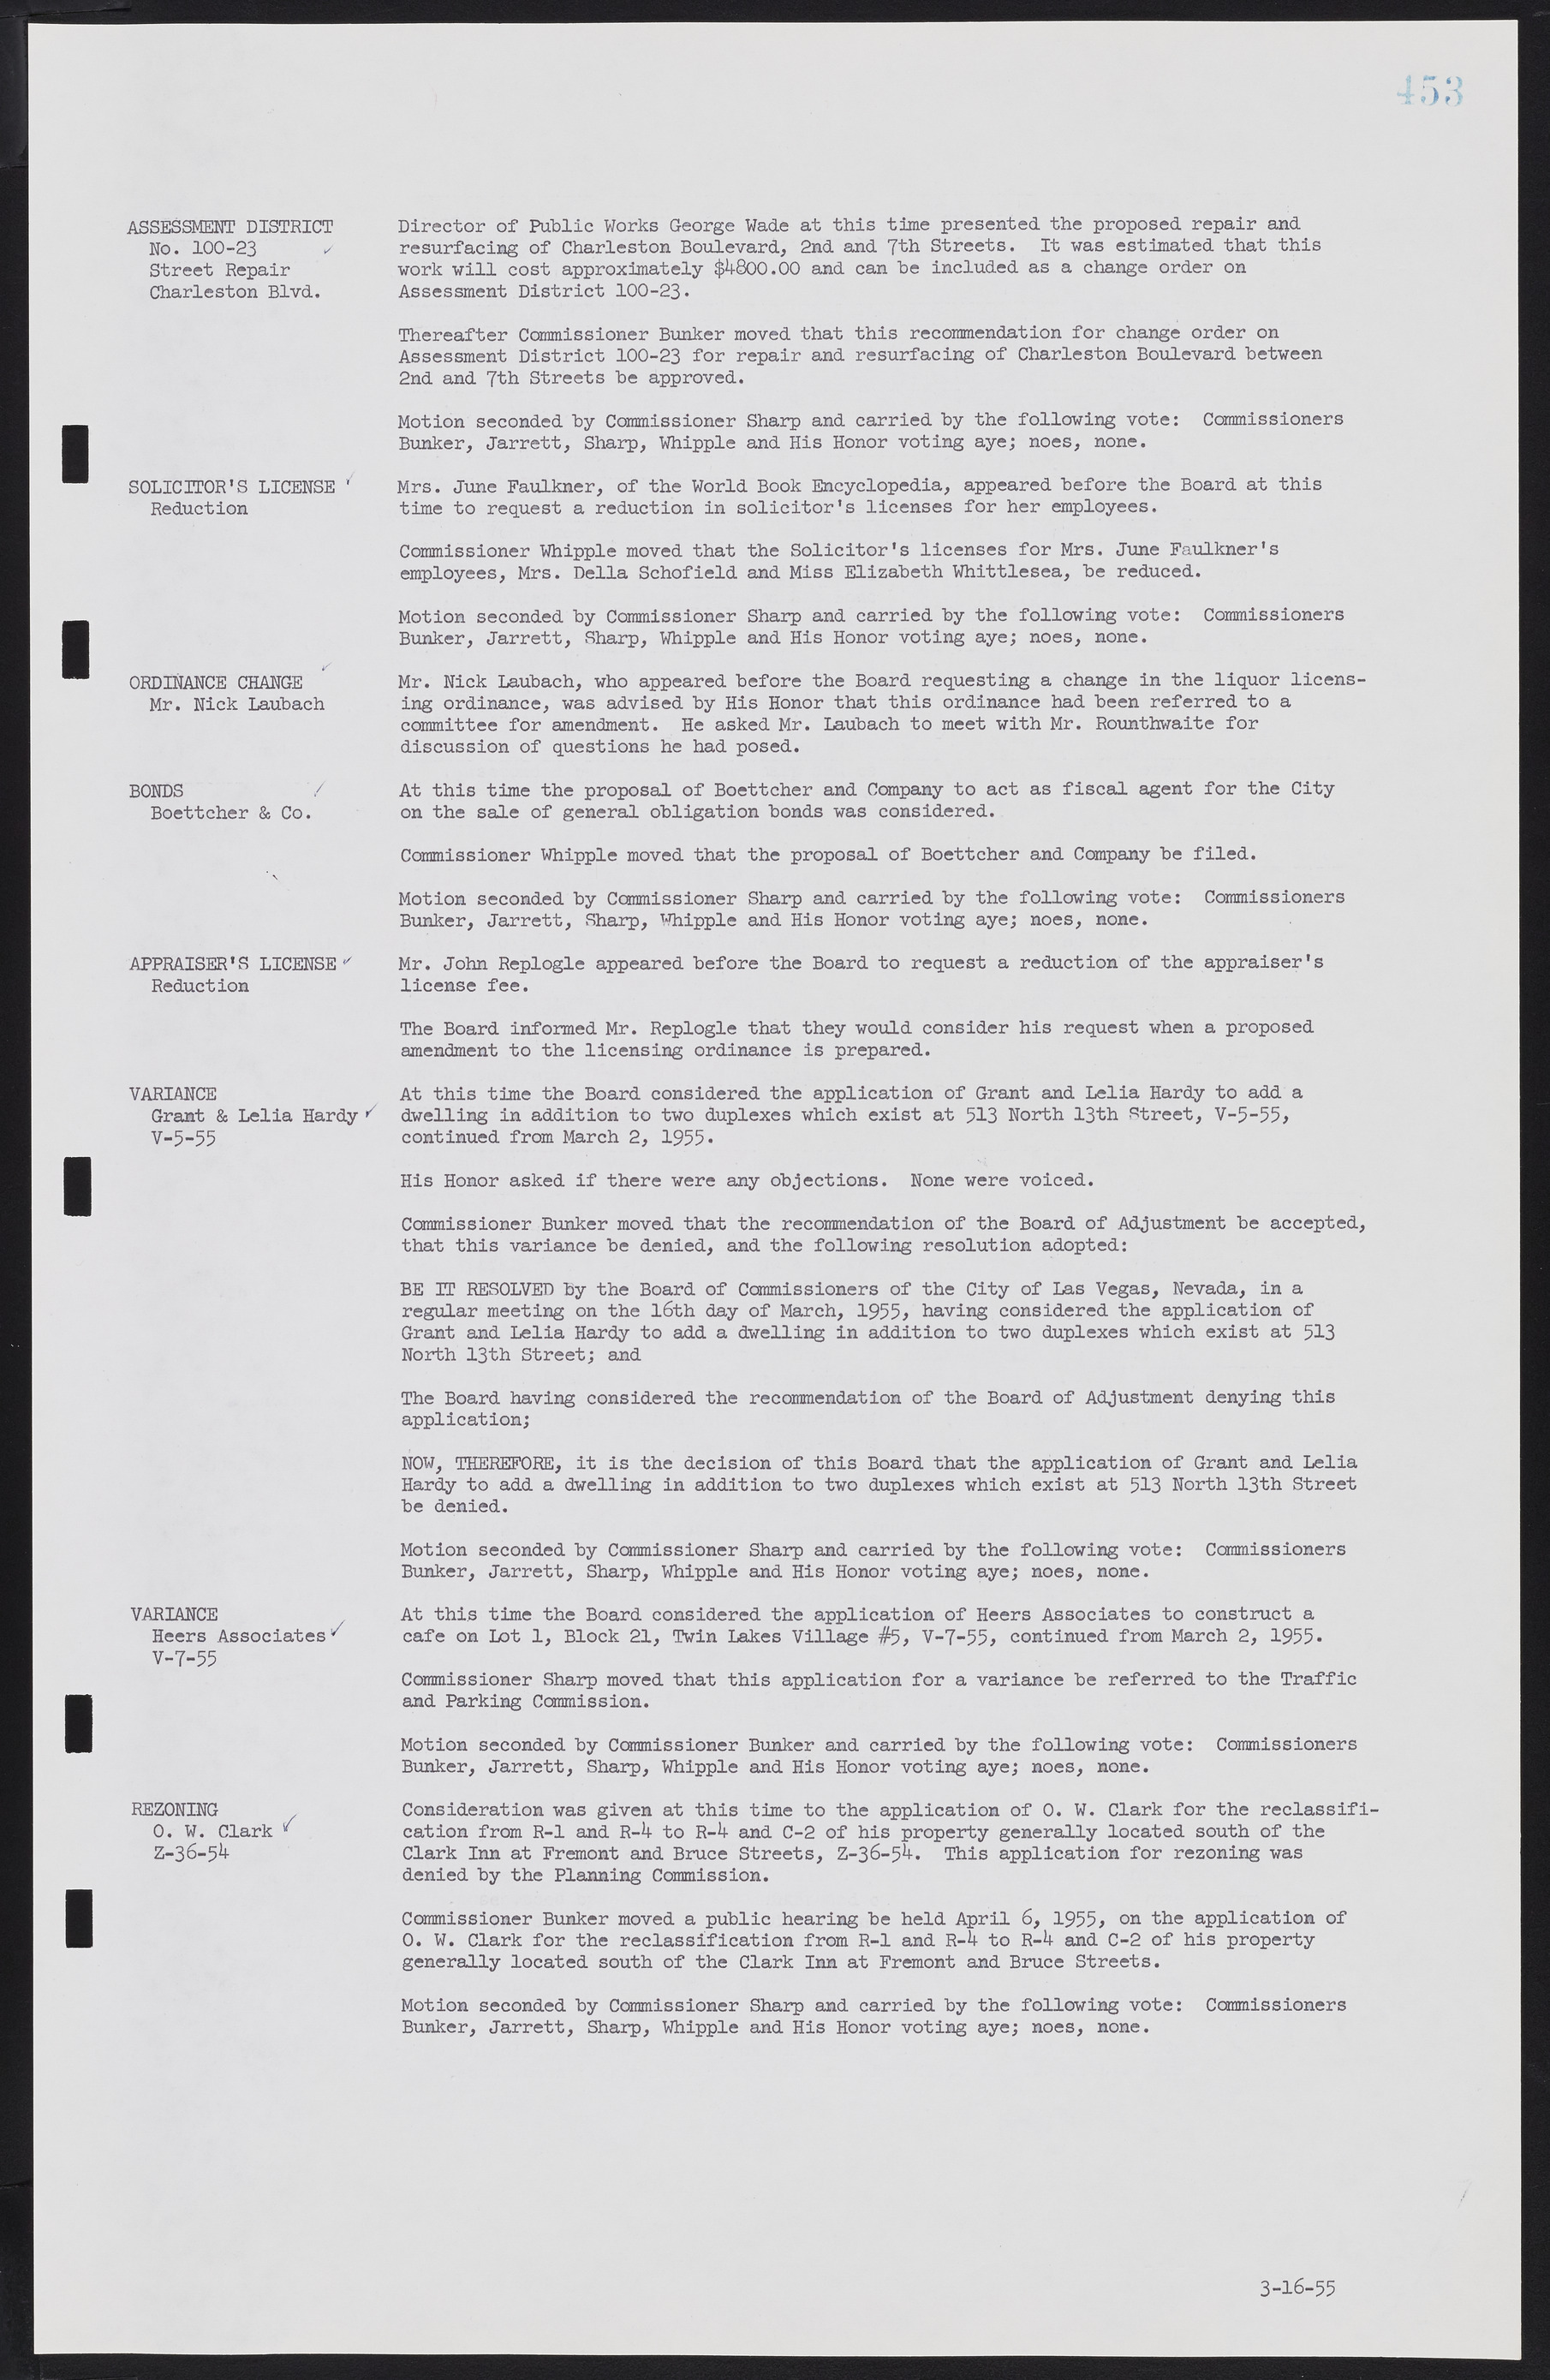 Las Vegas City Commission Minutes, February 17, 1954 to September 21, 1955, lvc000009-459